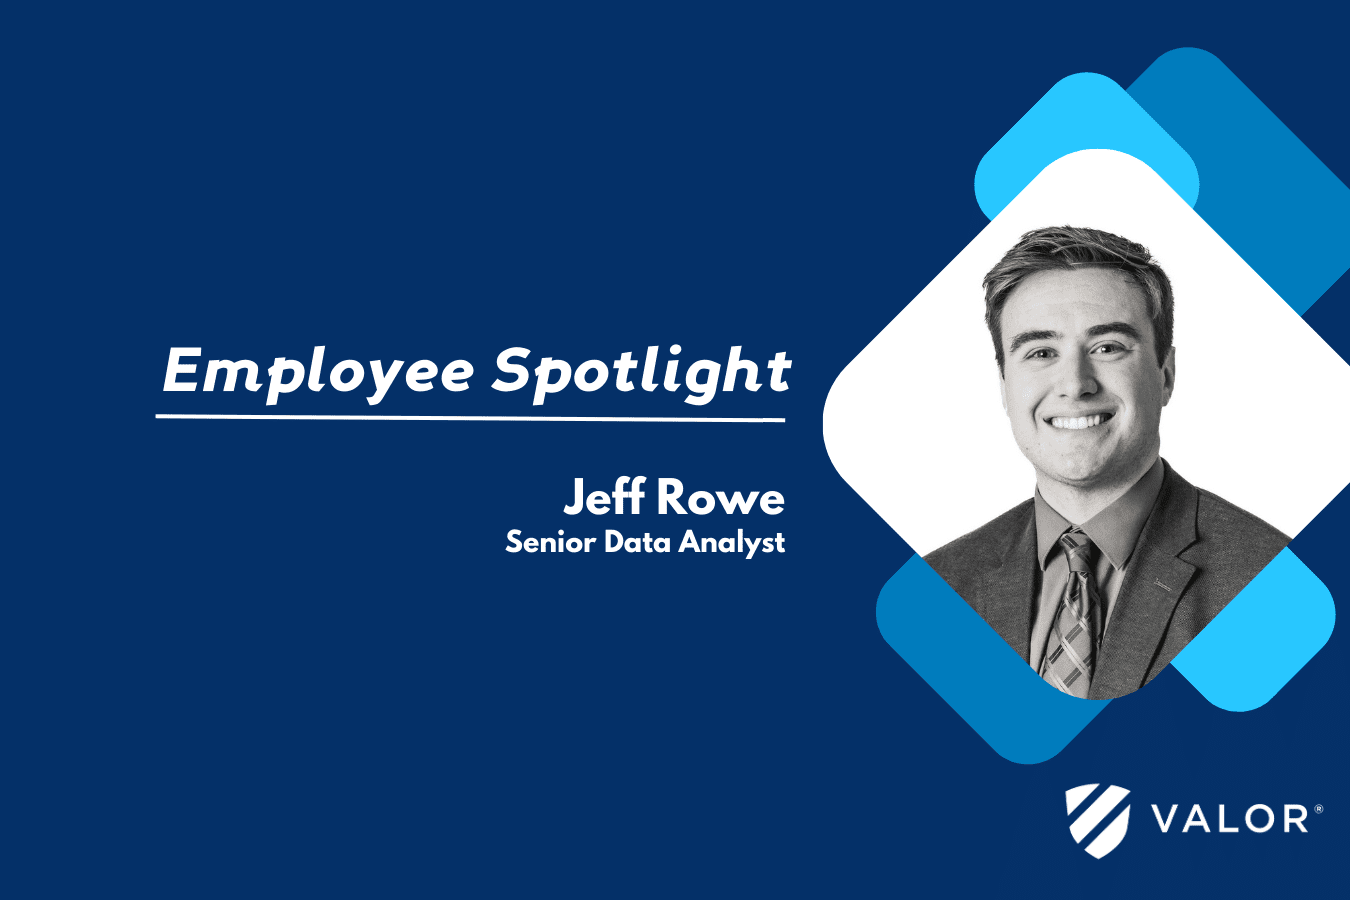 Jeff Rowe, Valor's Senior Data Analyst